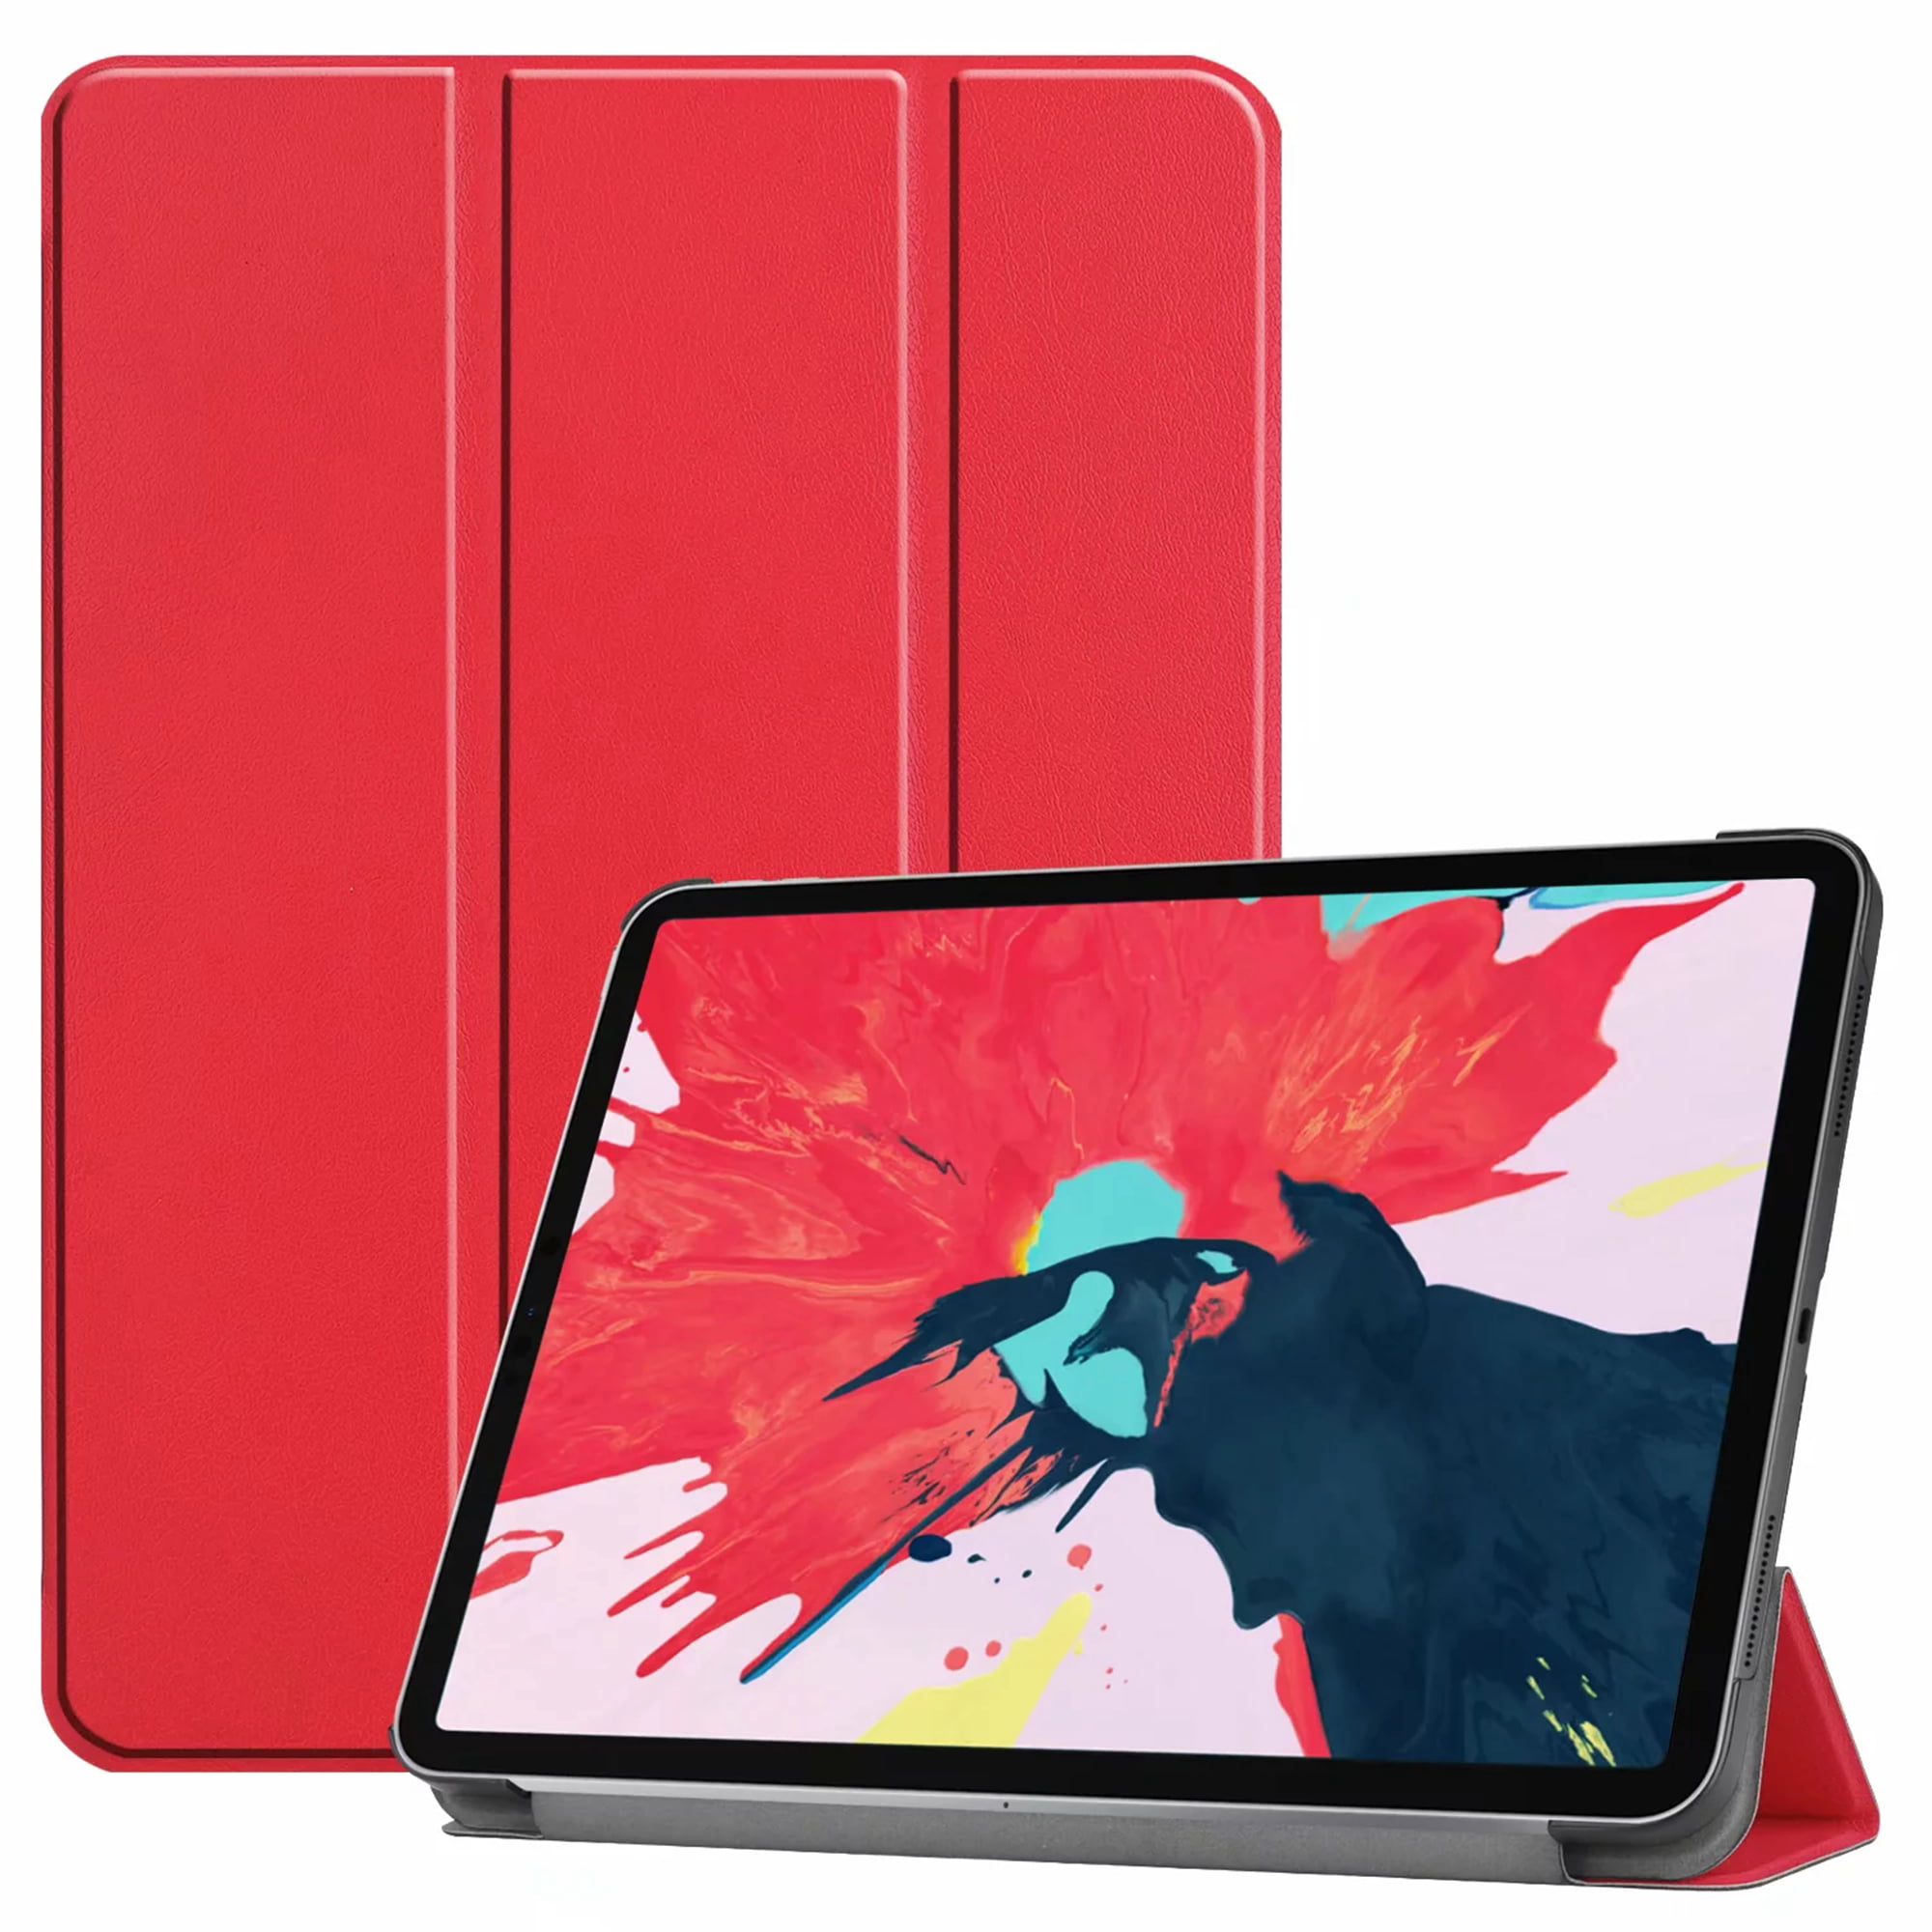 Sleek Slim Water-Proof Carrying Handbag Dadanism 9-11 Inch Tablet Sleeve Case for New iPad Pro 11 2020/2018,iPad 7th Generation 10.2 2019,iPad 9.7/Air 10.5,Galaxy Tab A 10.1,Surface Go Black & Gray 